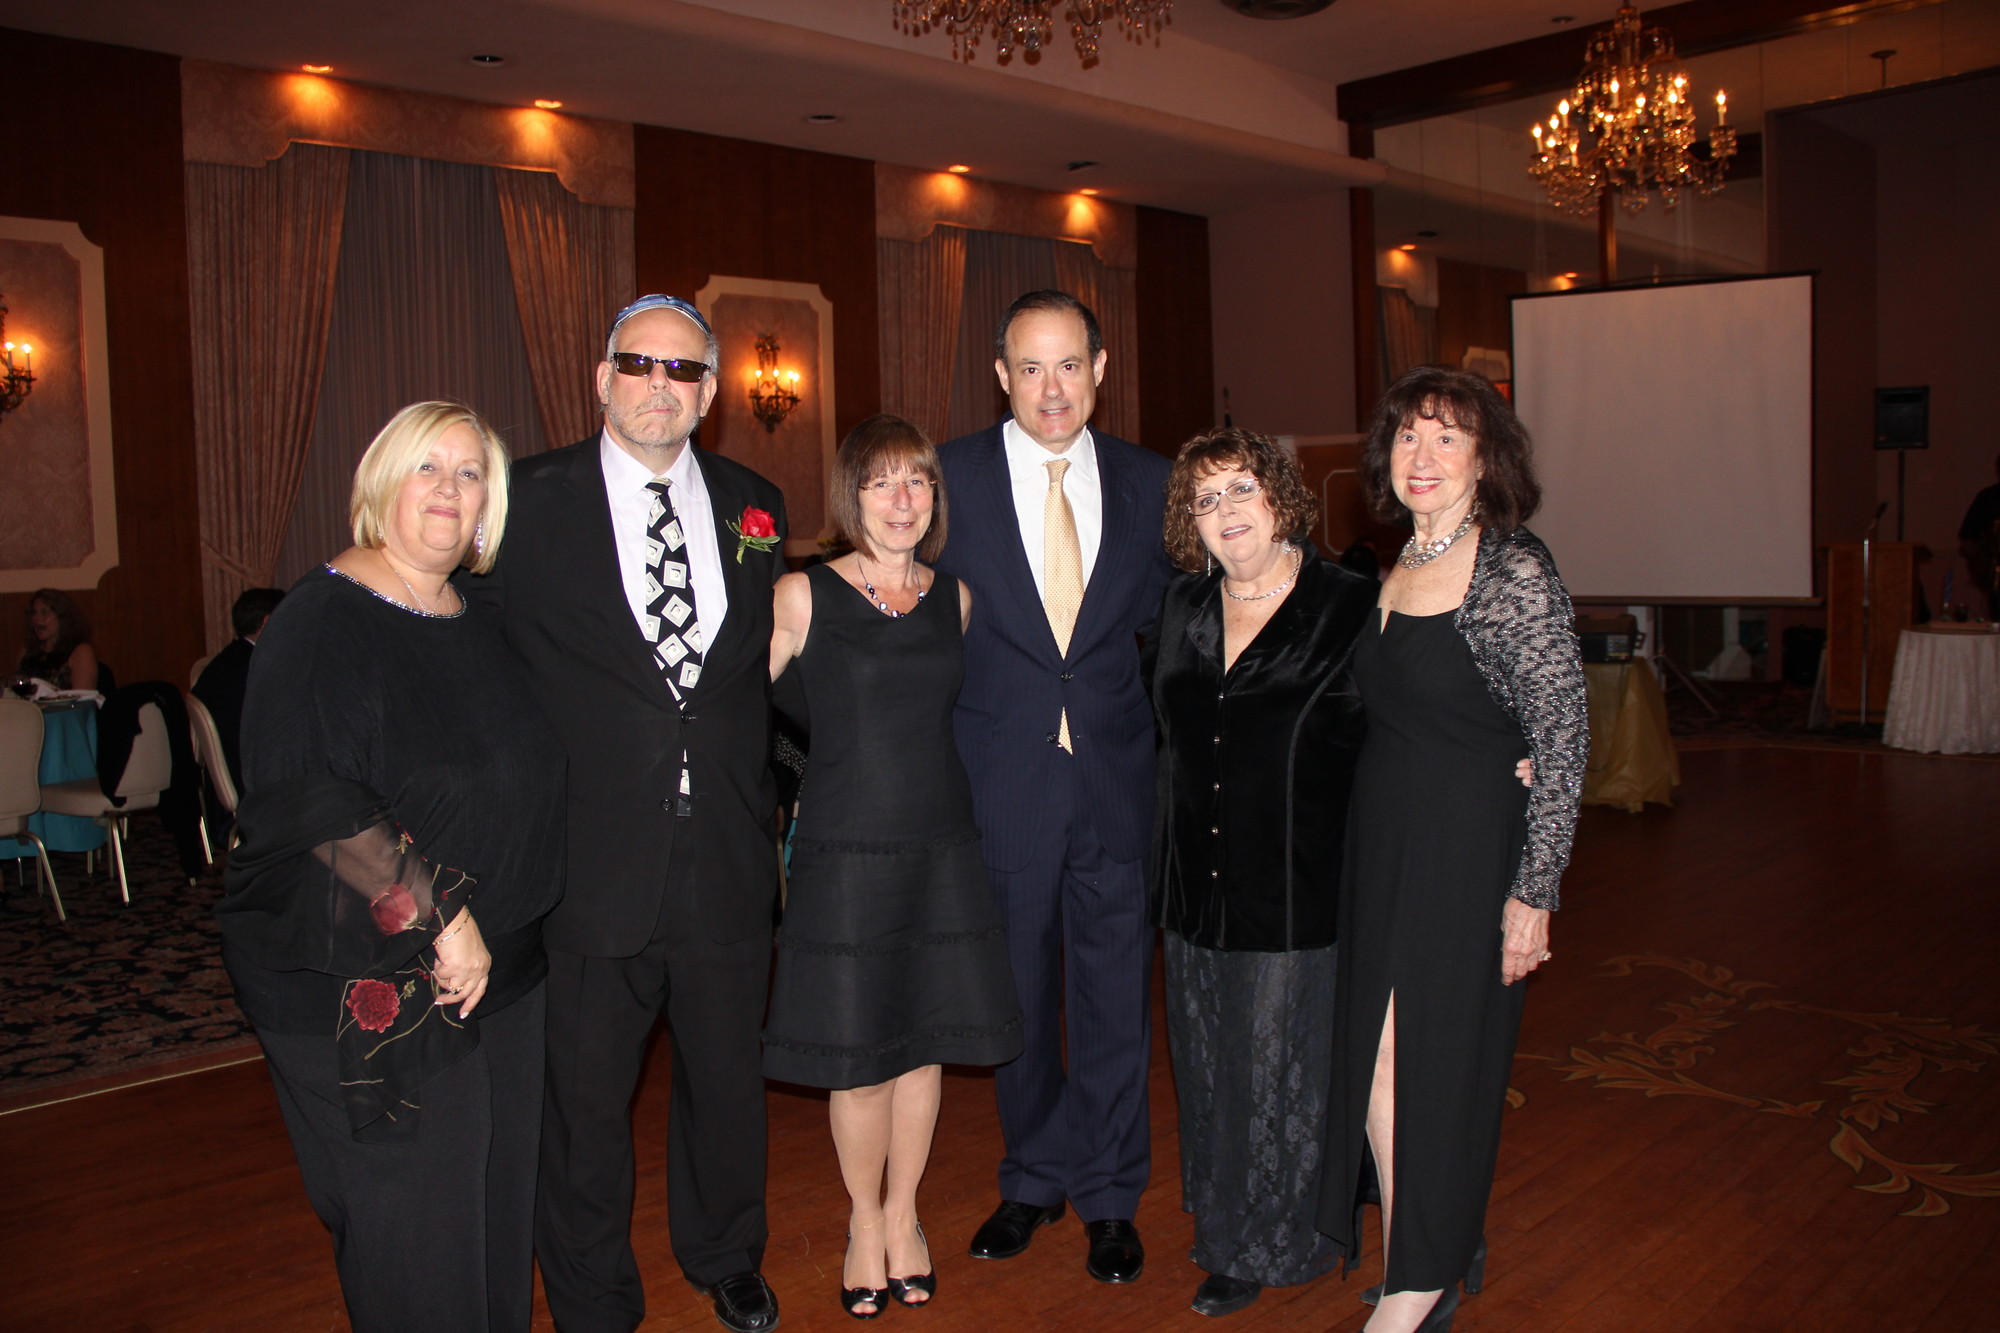 Meri Masin, left, Rabbi Marc Gruber, Renee Gruber, David Nemschuff, Gail Zerfuss, and co-chair of the fundraising committee Nina Roll.